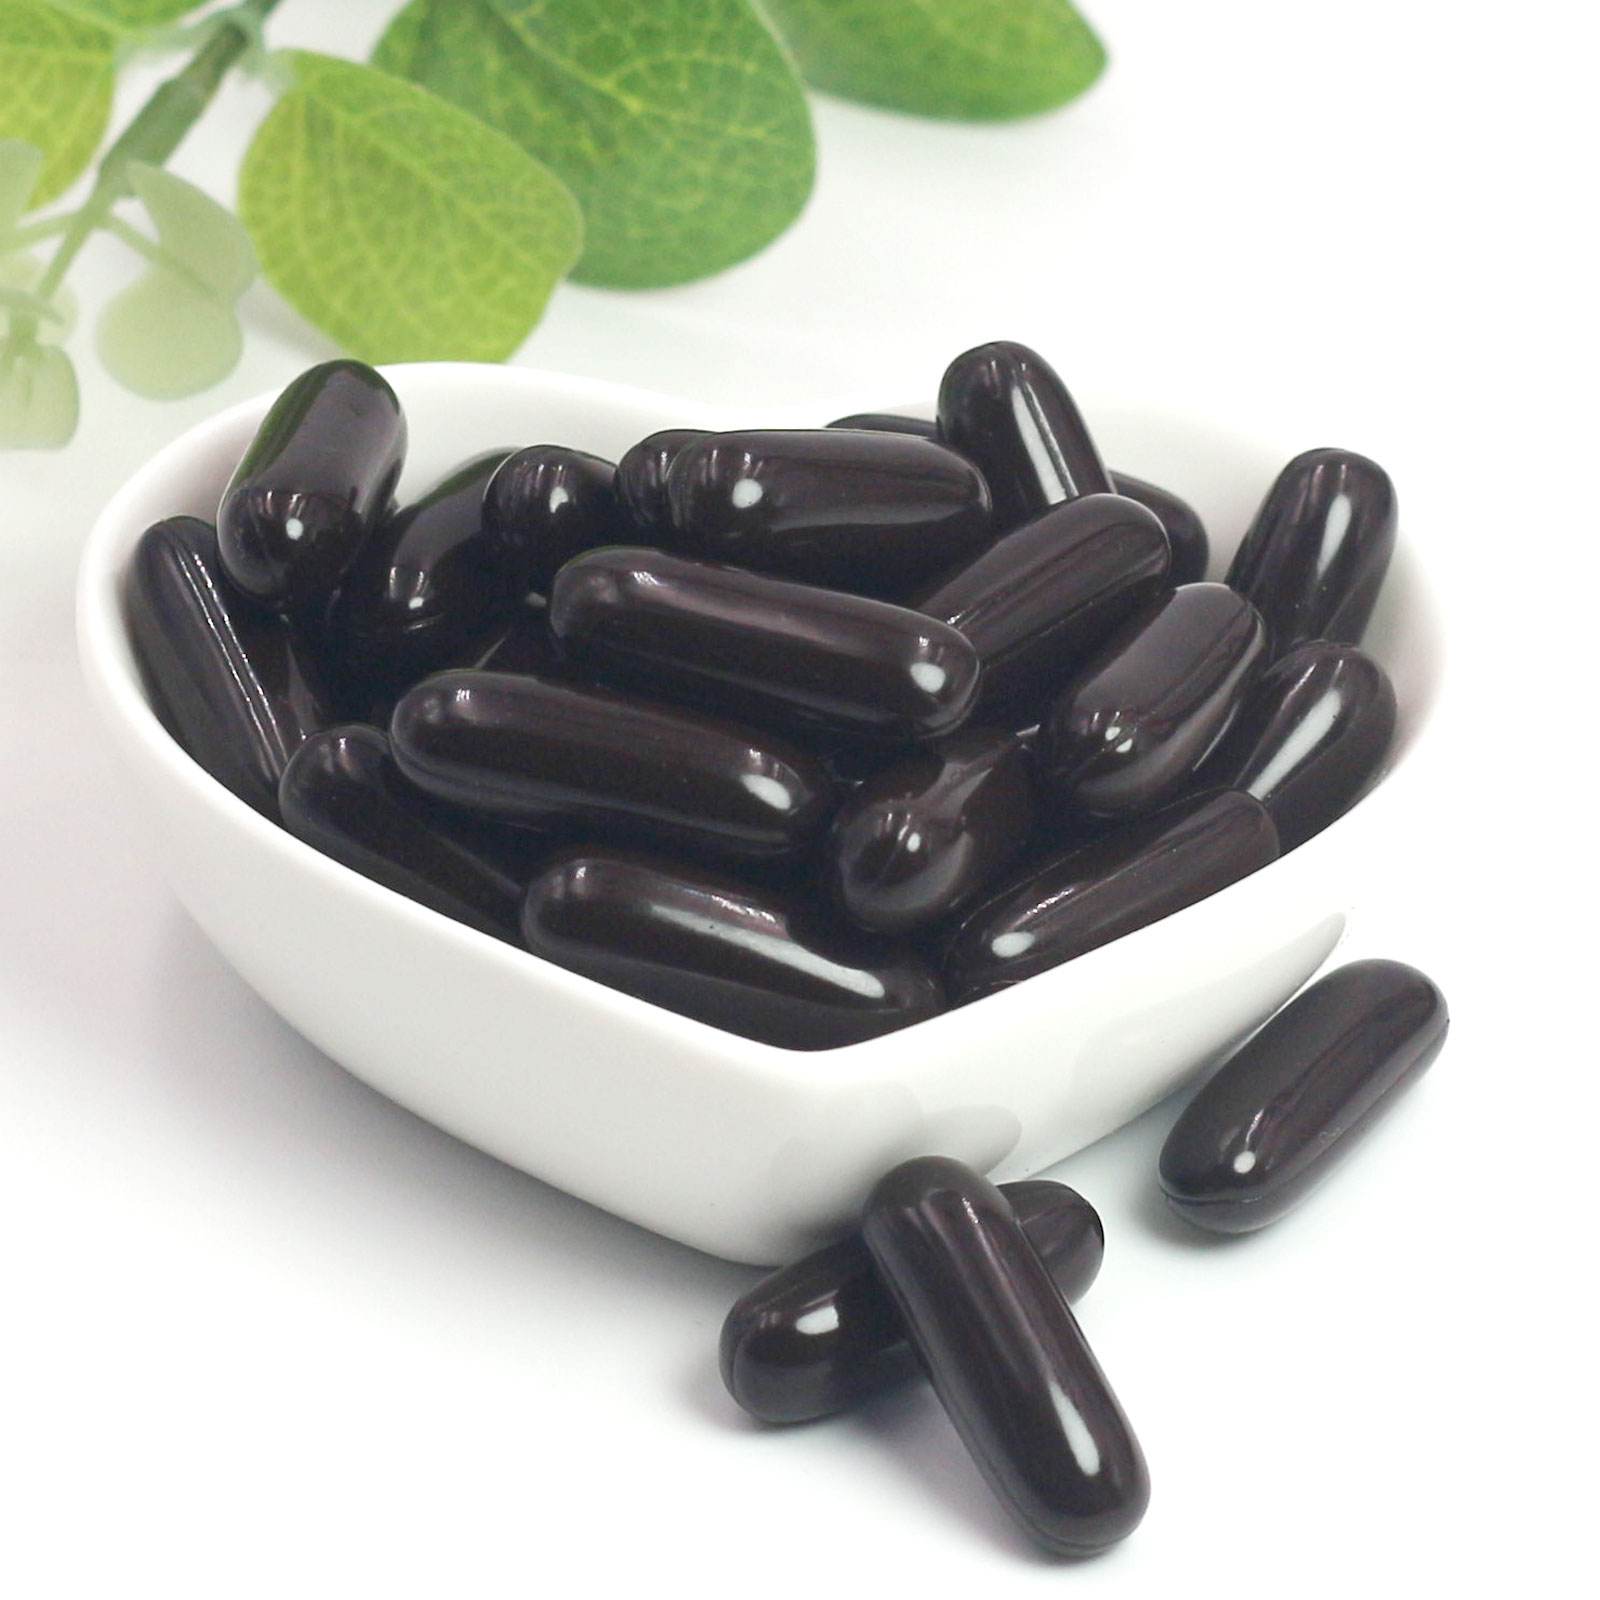 OEM bulk 100% pure natural organic extract 500mg lycopene and vitamin e oil soft capsule for skin care